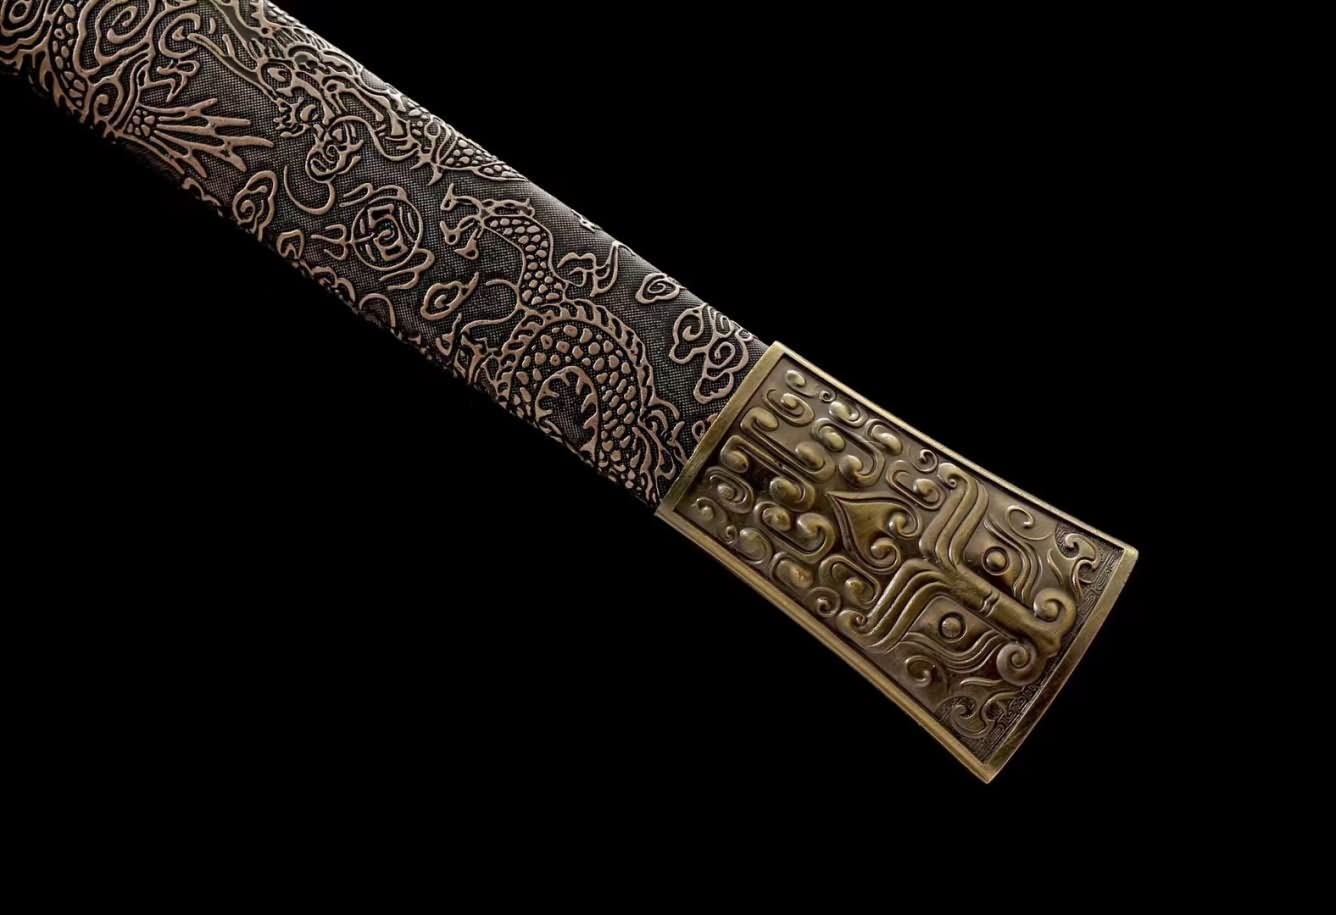 Han jian Sword Real Forged Medium Carbon Steel Blade Alloy Fittings Wu shu Kung fu,chinese sword